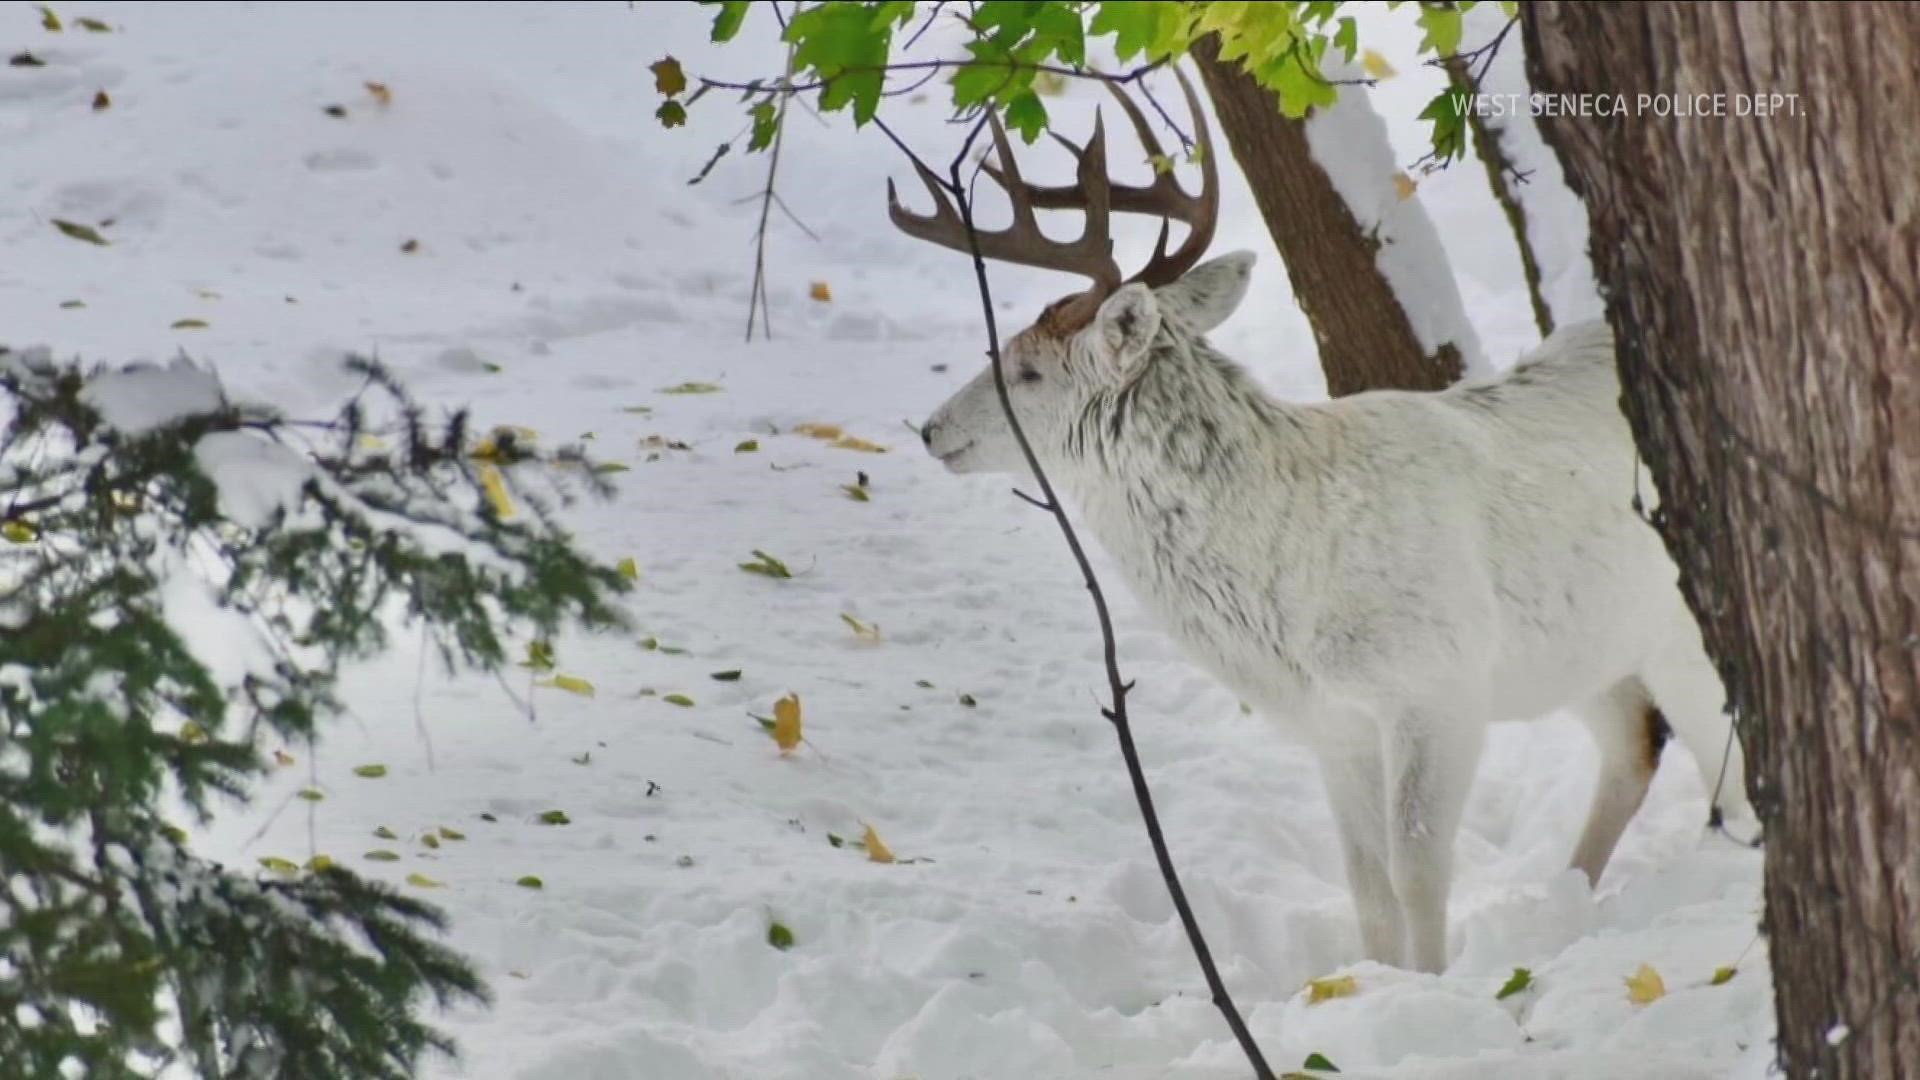 White deer spotted in West Seneca